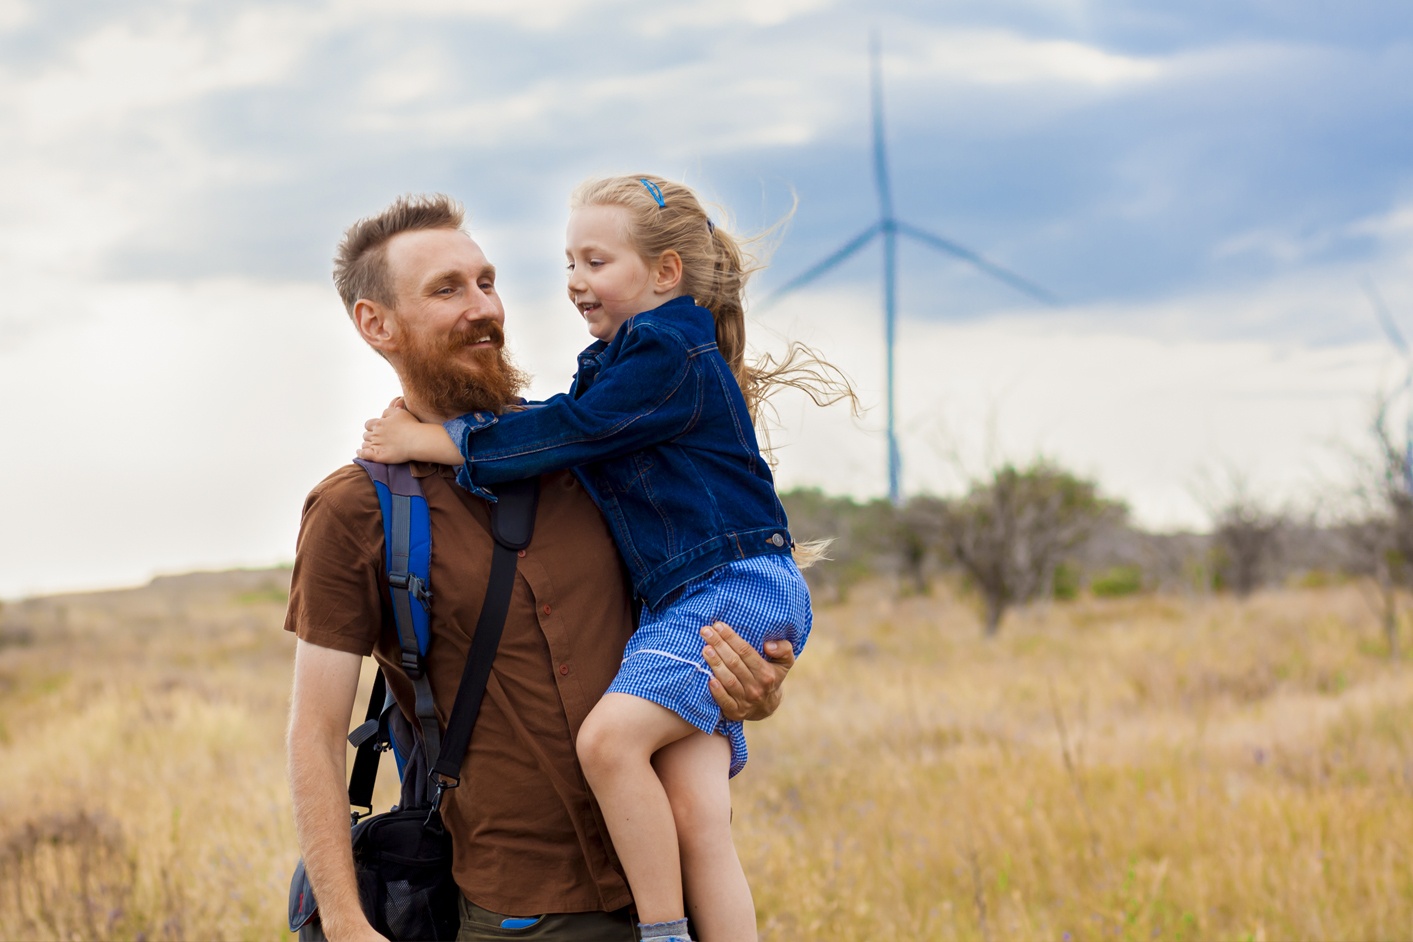 Man holding girl infront of wind turbine